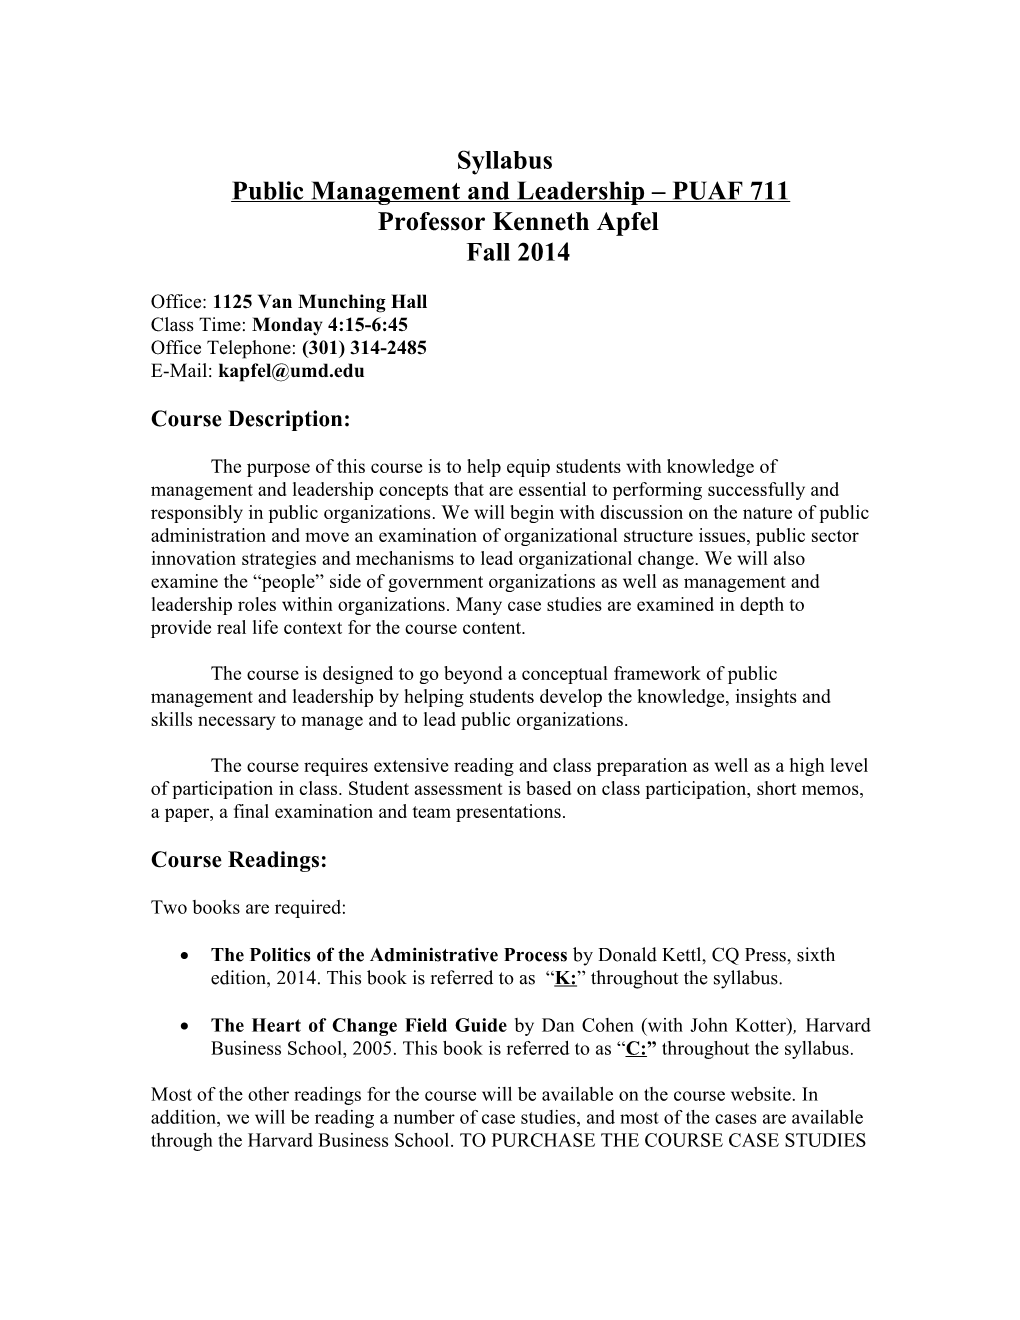 Public Management and Leadership PUAF711